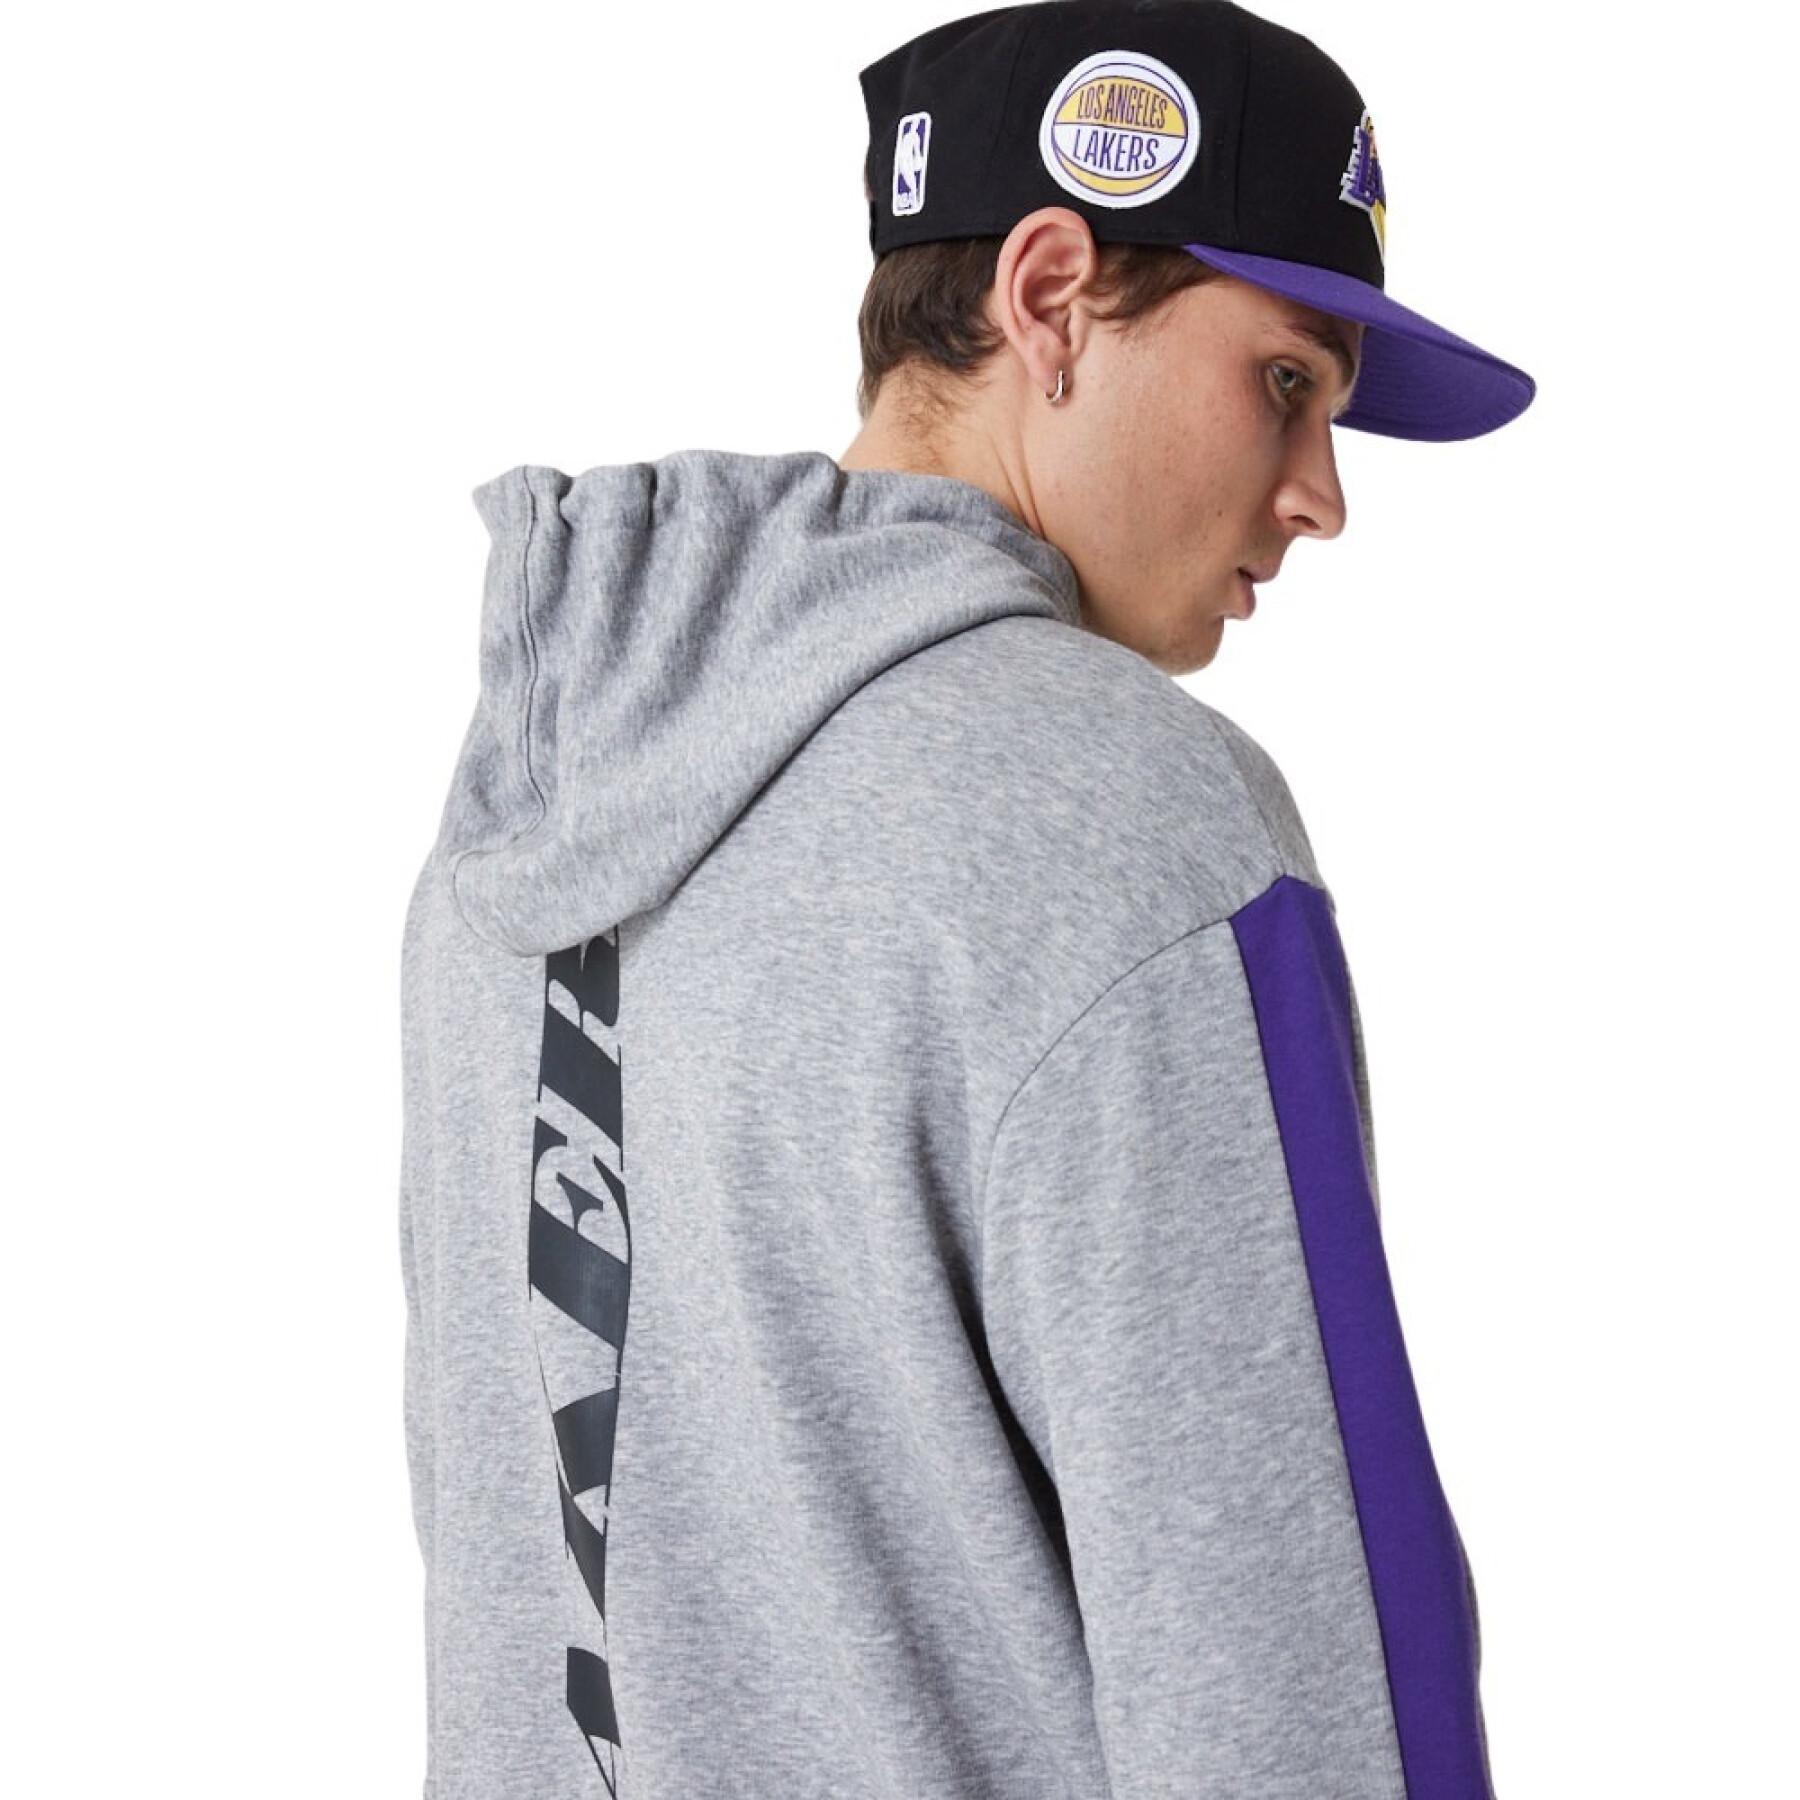 Sweatshirt Los Angeles Lakers NBA Color Block